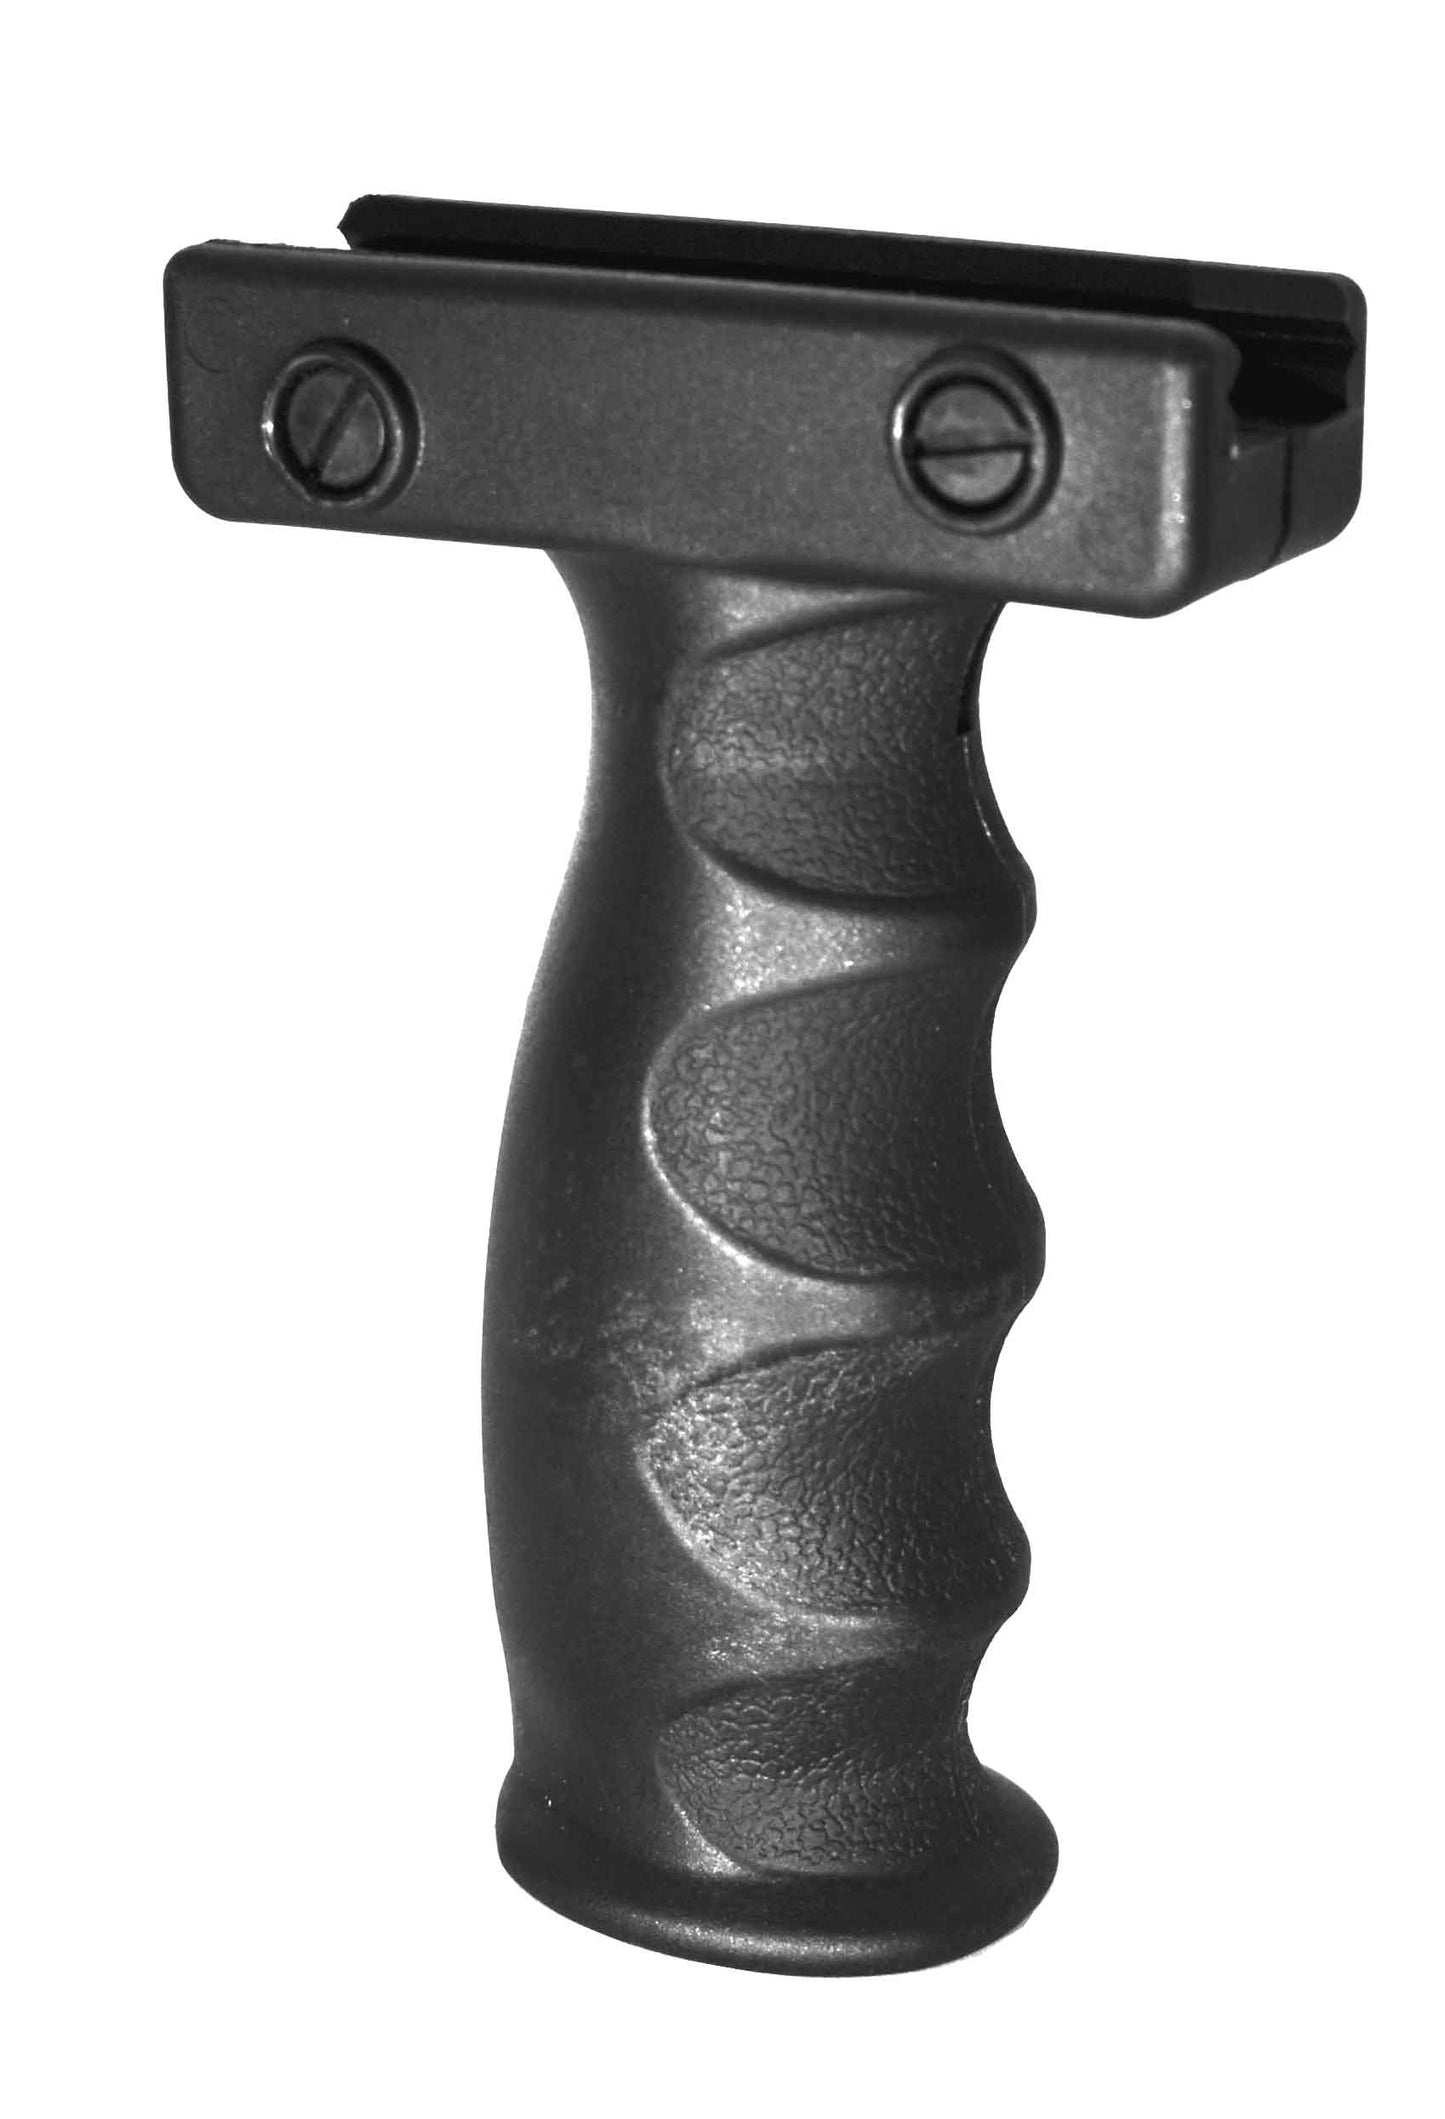 vertical grip black for rifles and shotguns.